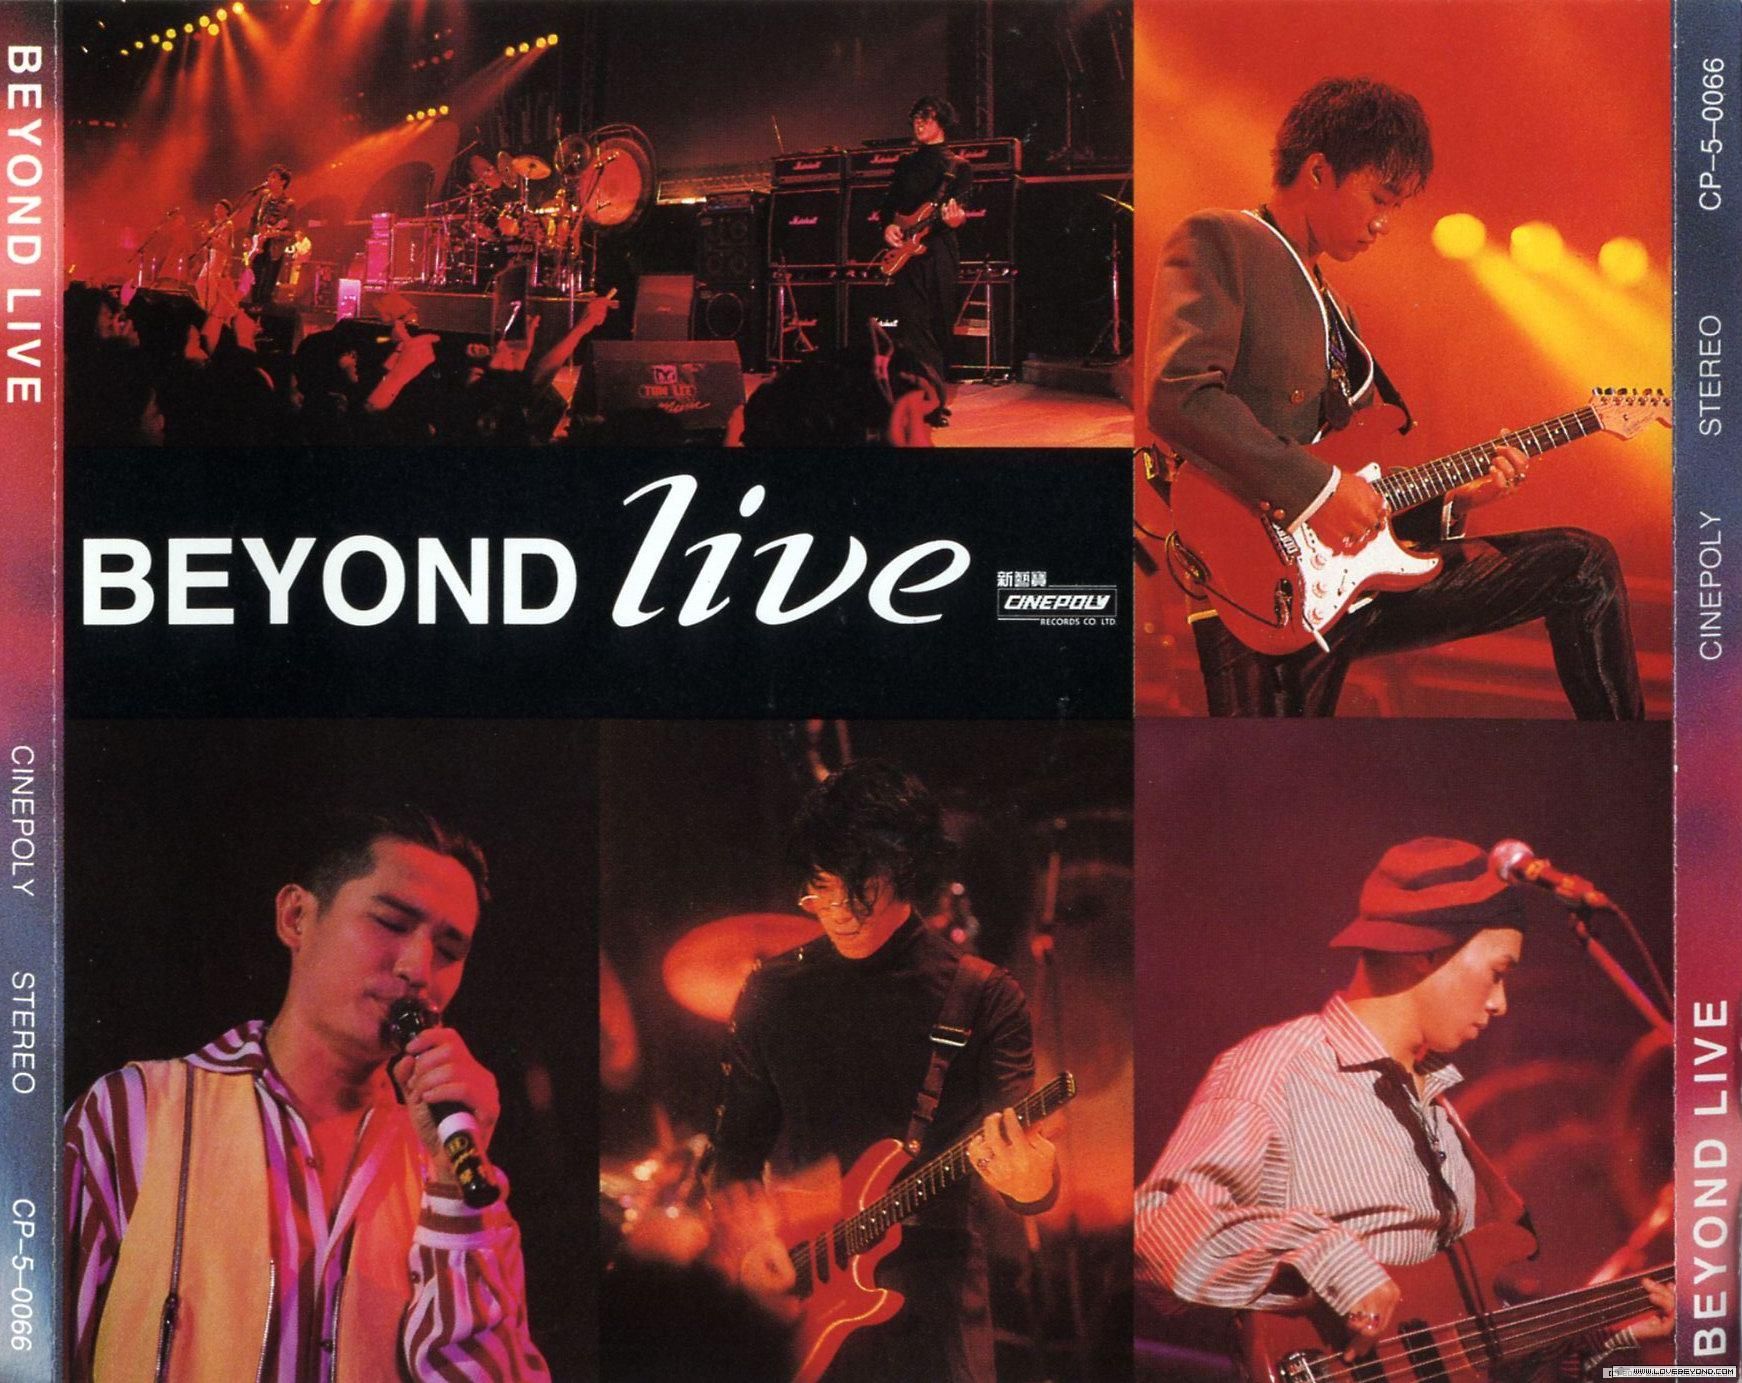 Beyond Live 1991 生命接觸演唱會(BeyondLive1991生命接觸演唱會)